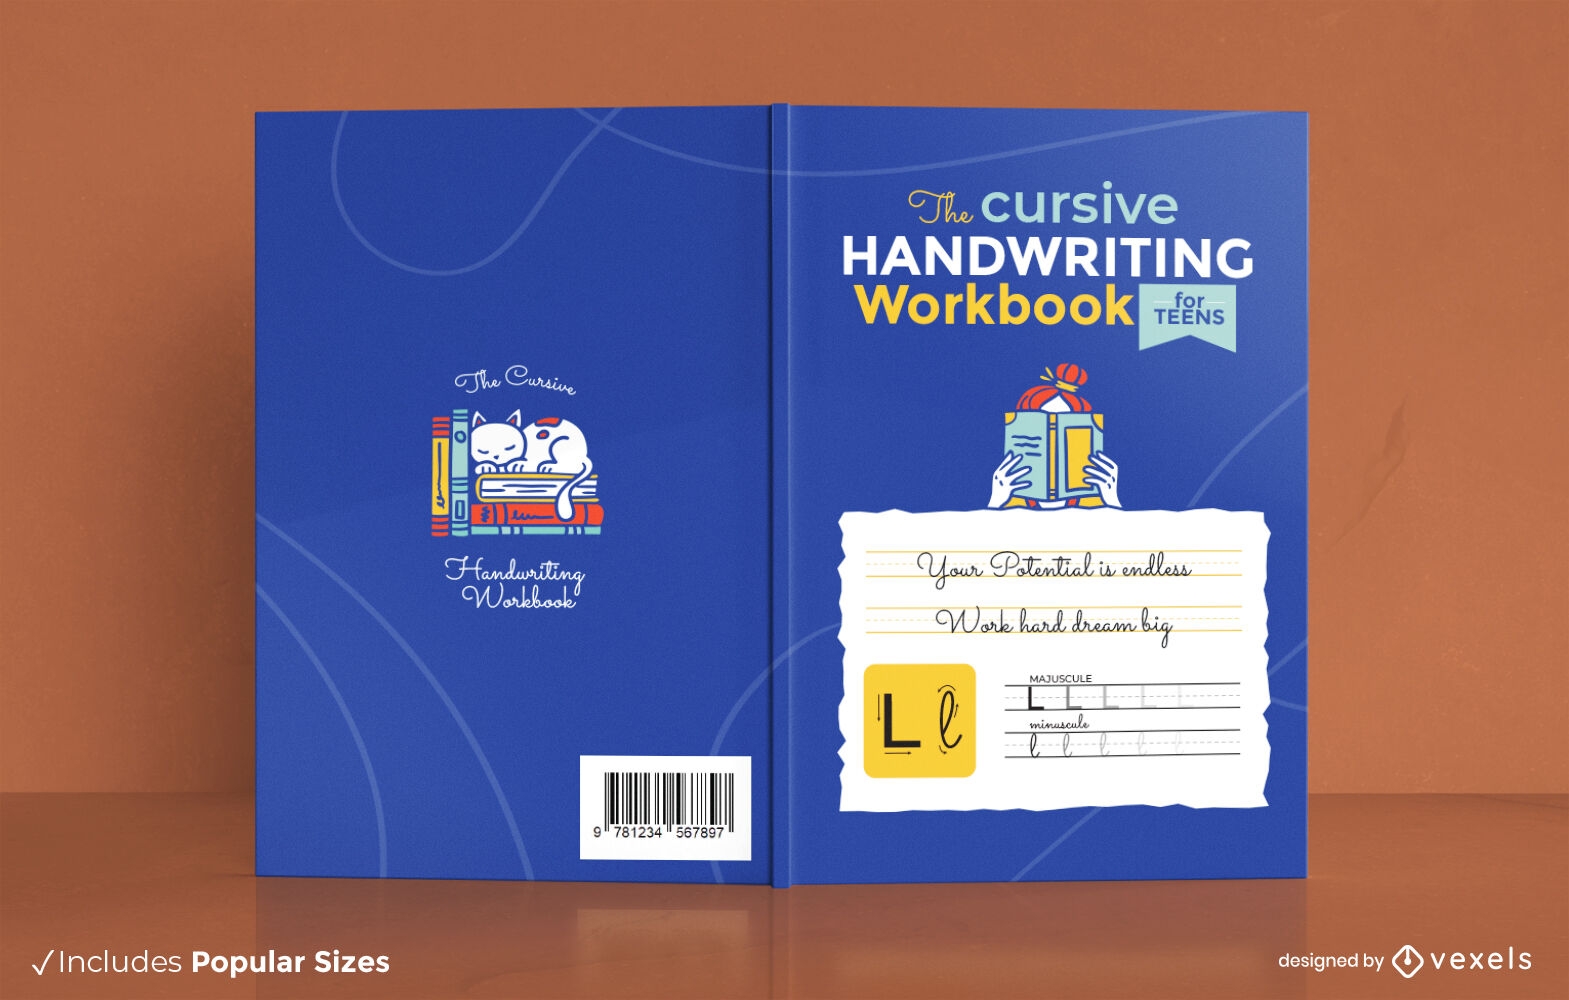 Cursive handwriting workbook cover design